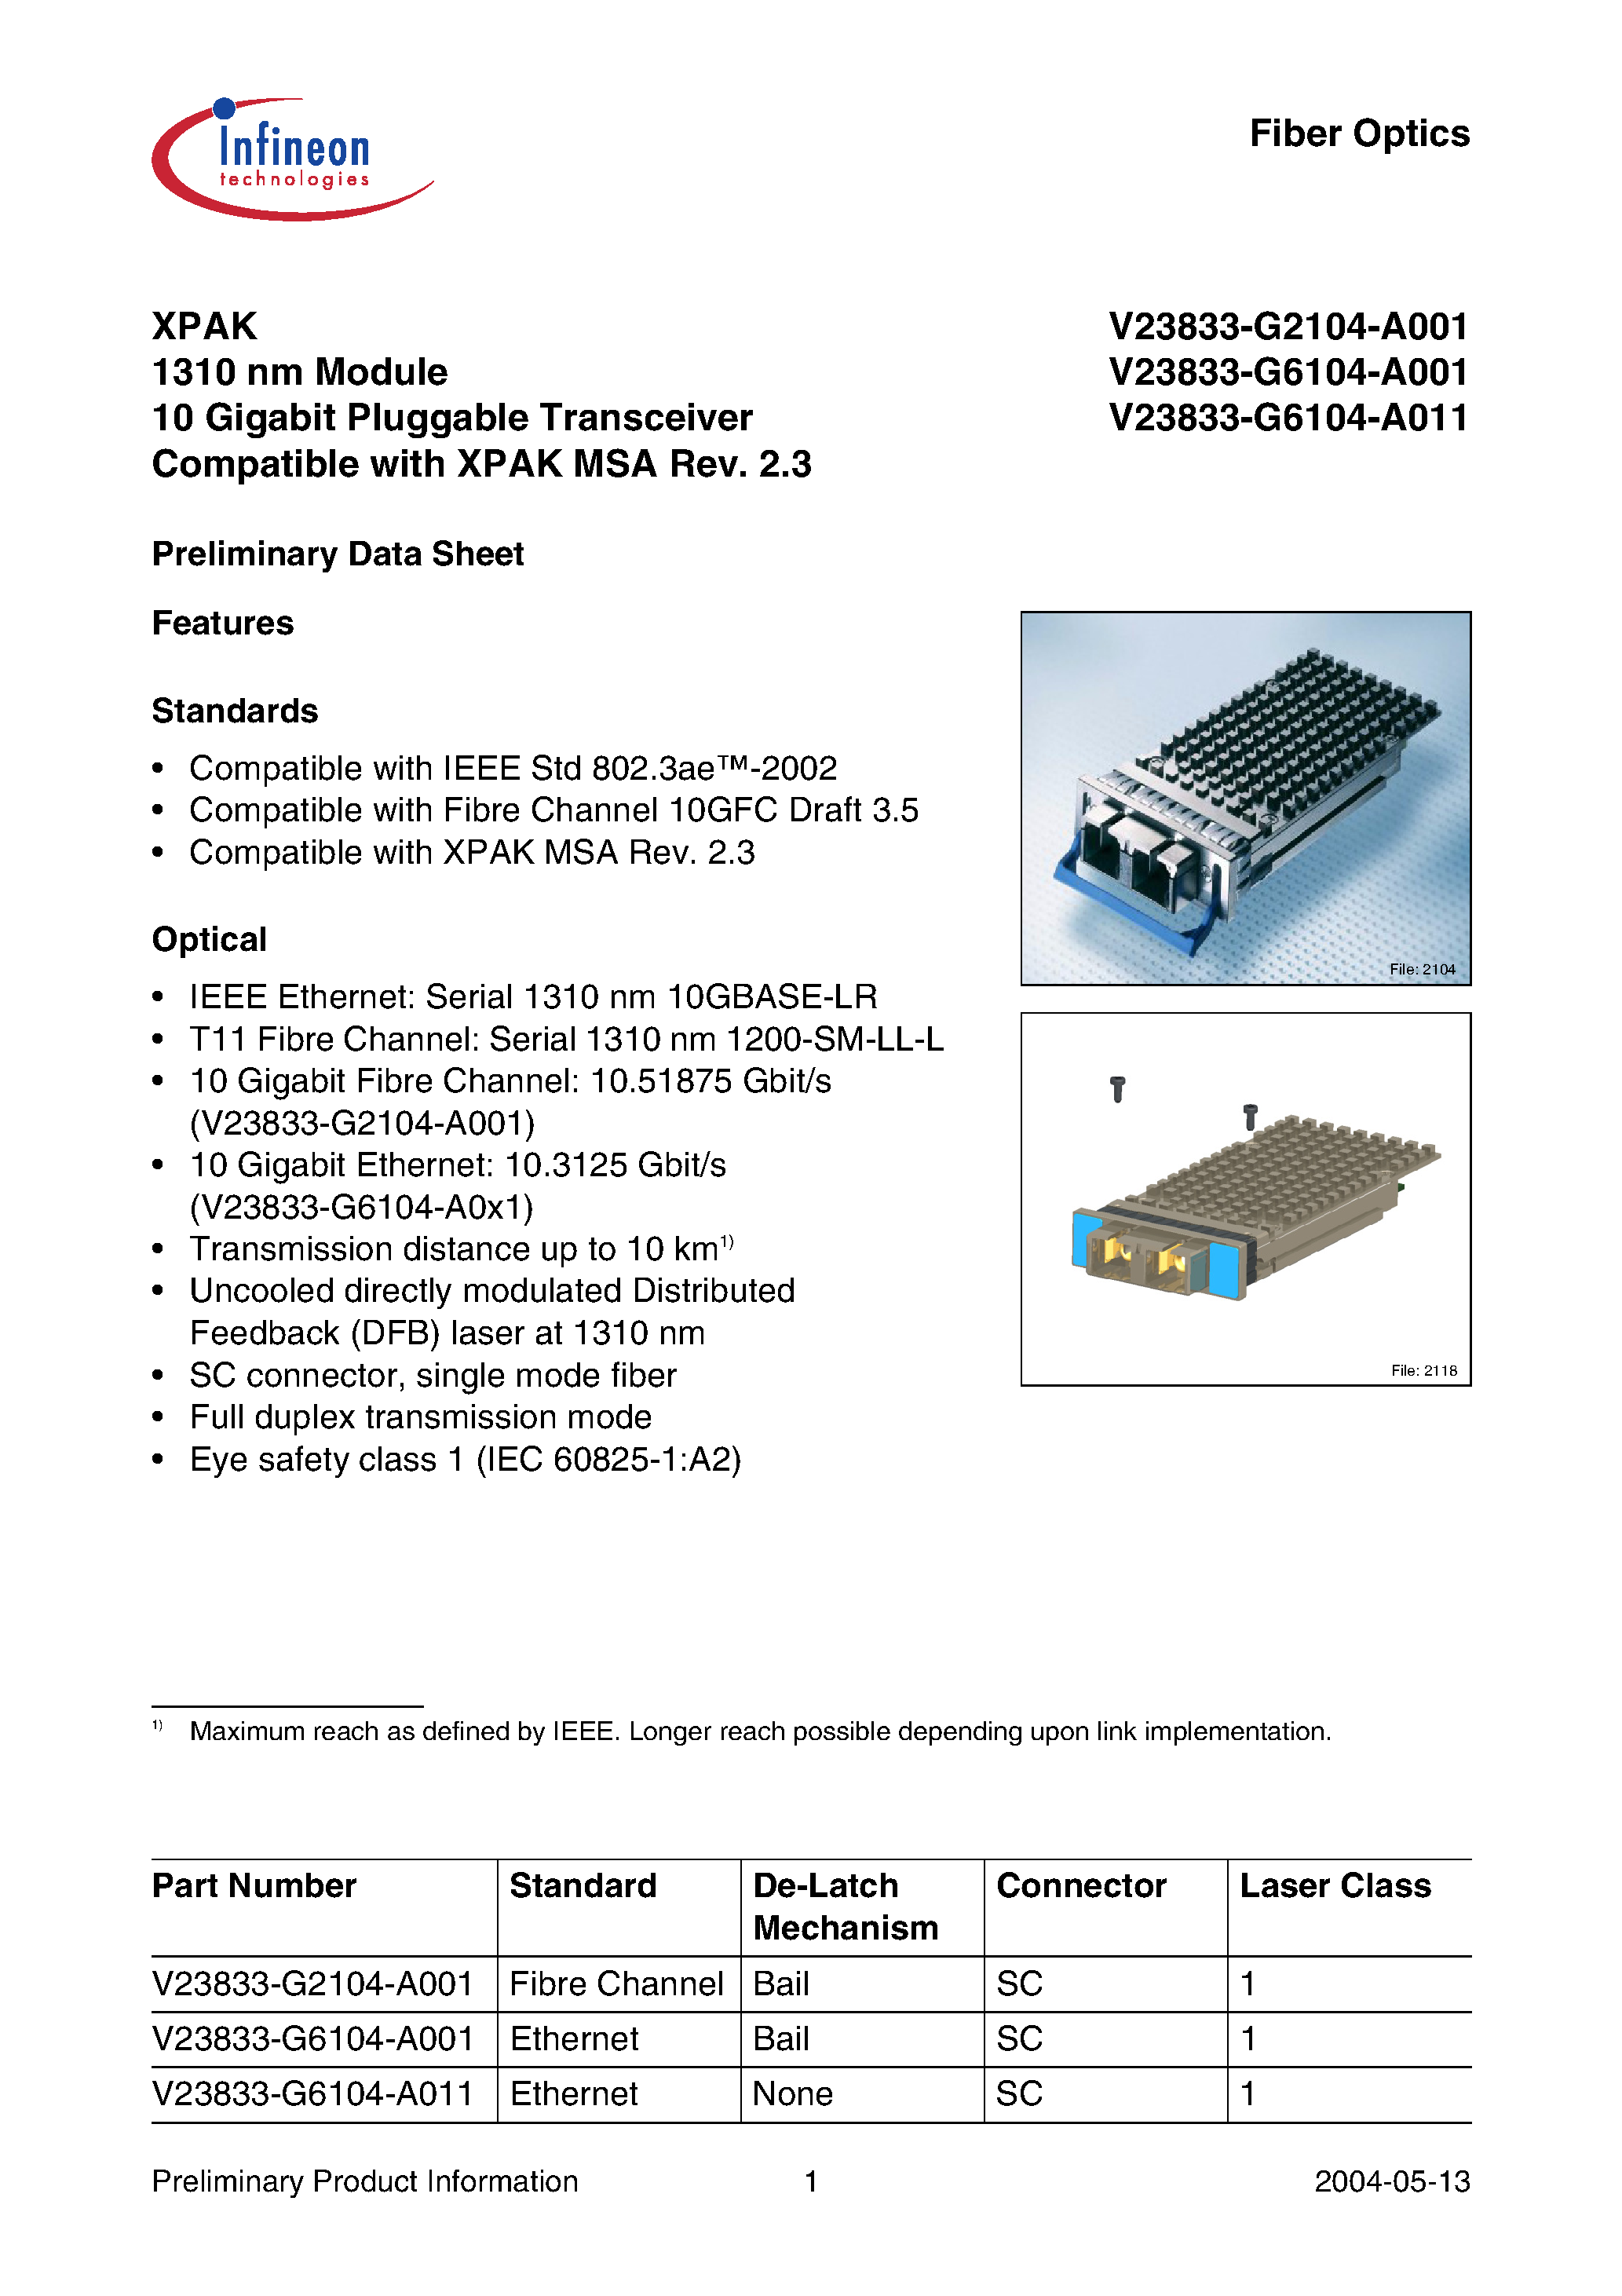 Datasheet V23833-G6104-A011 - XPAK 1310 nm Module 10 Gigabit Pluggable Transceiver Compatible with XPAK MSA Rev. 2.3 page 1